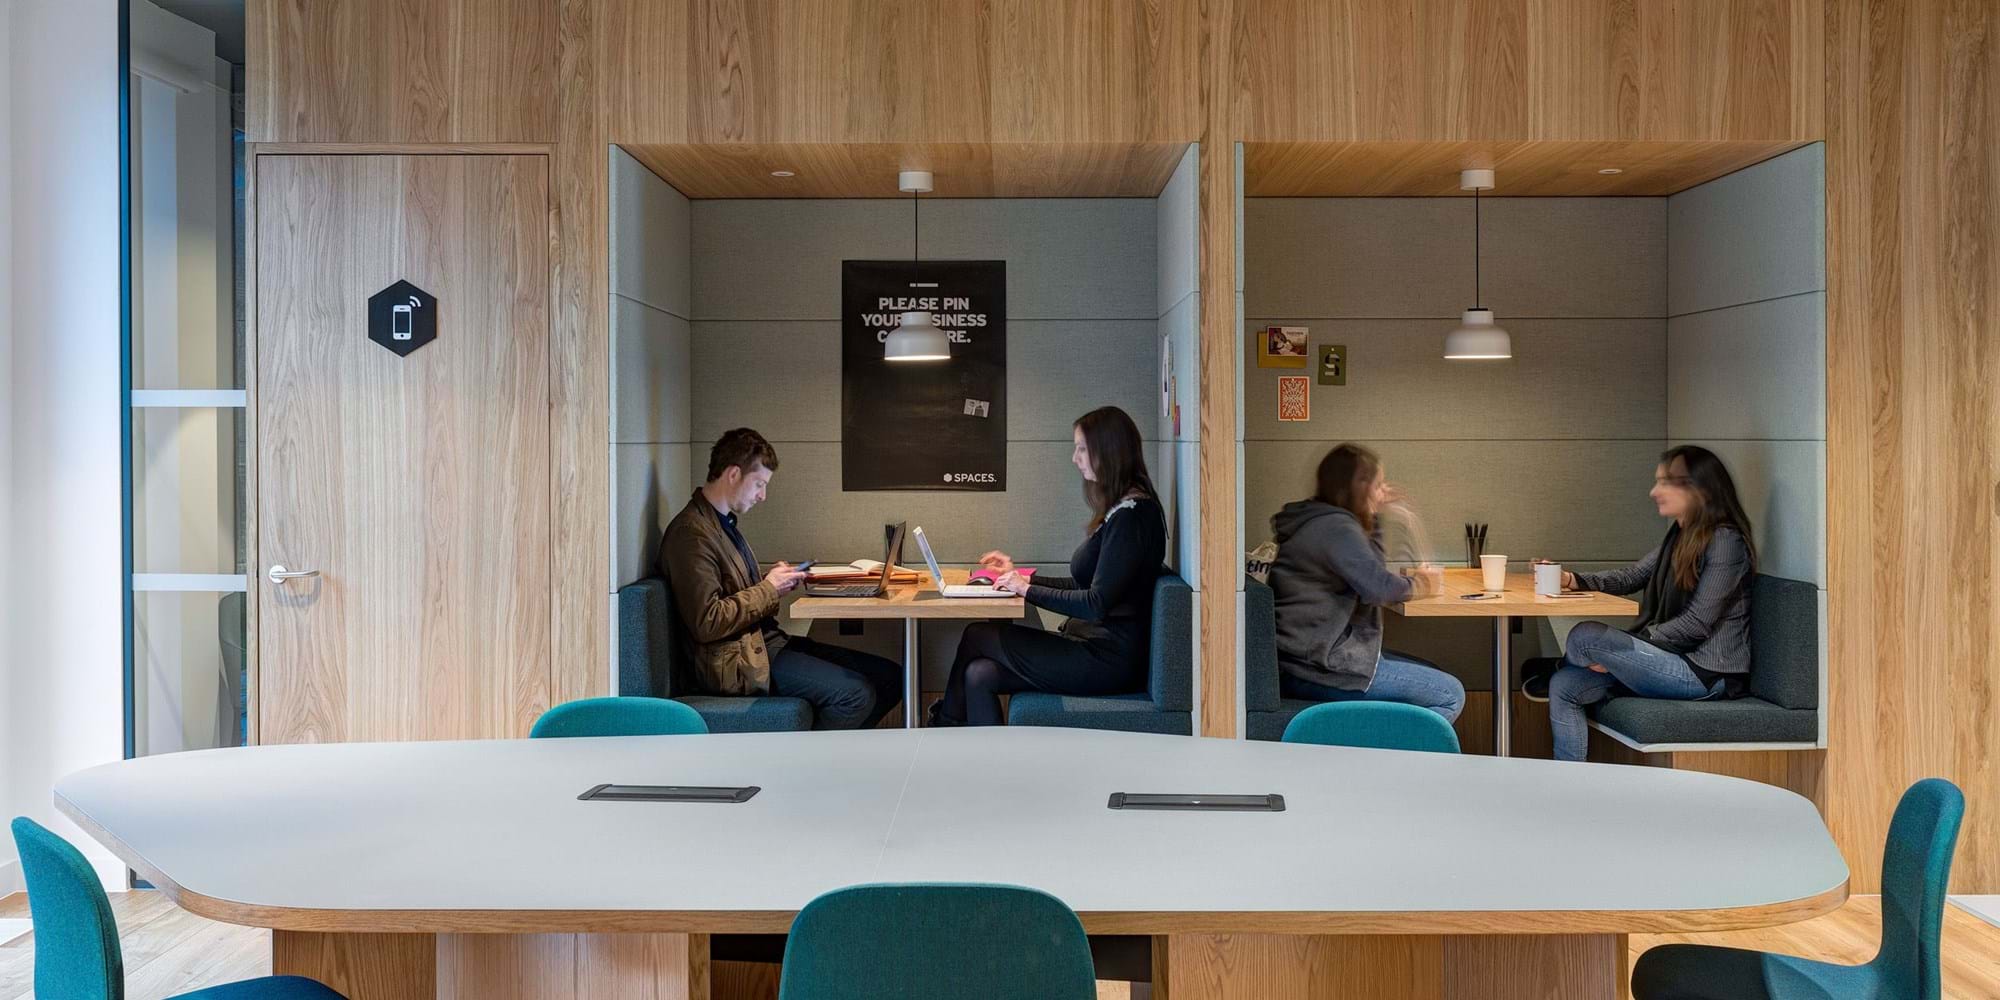 Modus Workspace office design, fit out and refurbishment - Spaces - Uxbridge - Spaces Uxbridge 11 highres sRGB.jpg